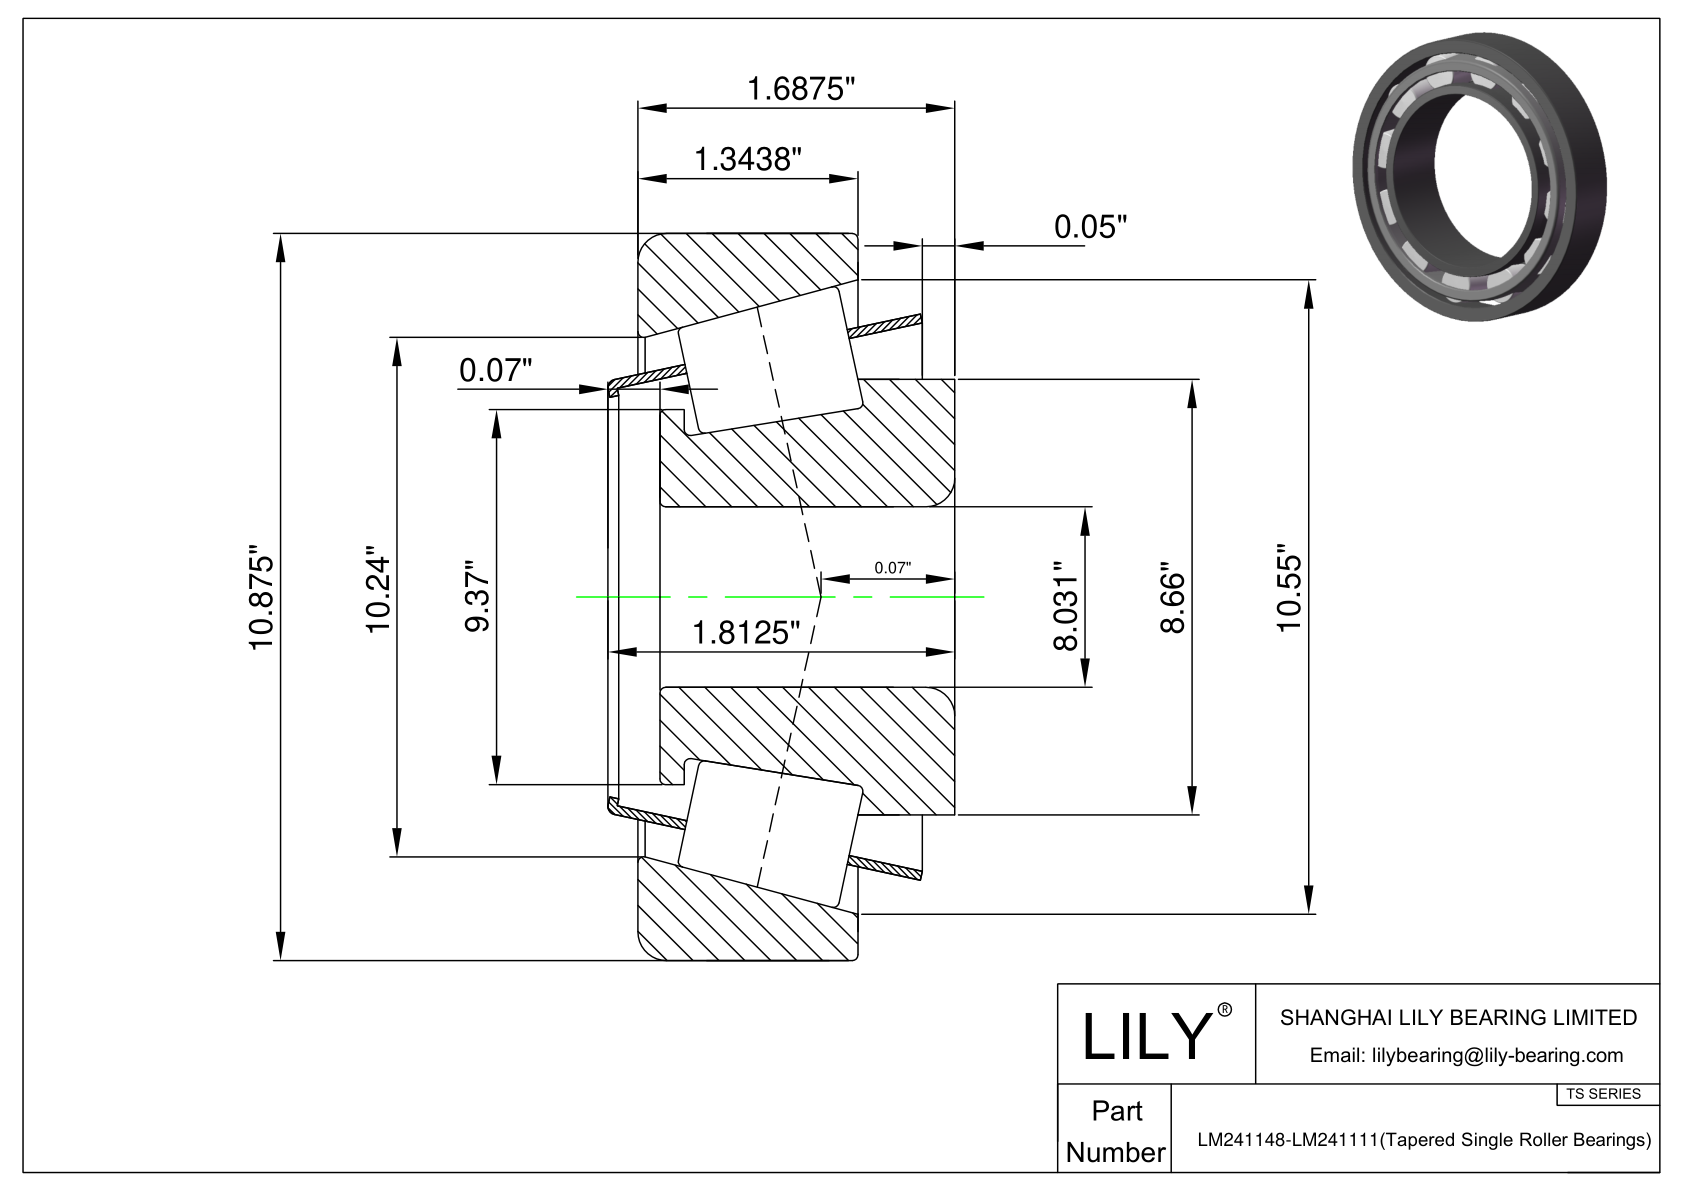 LM241148-LM241111 TS系列(圆锥单滚子轴承)(英制) CAD图形